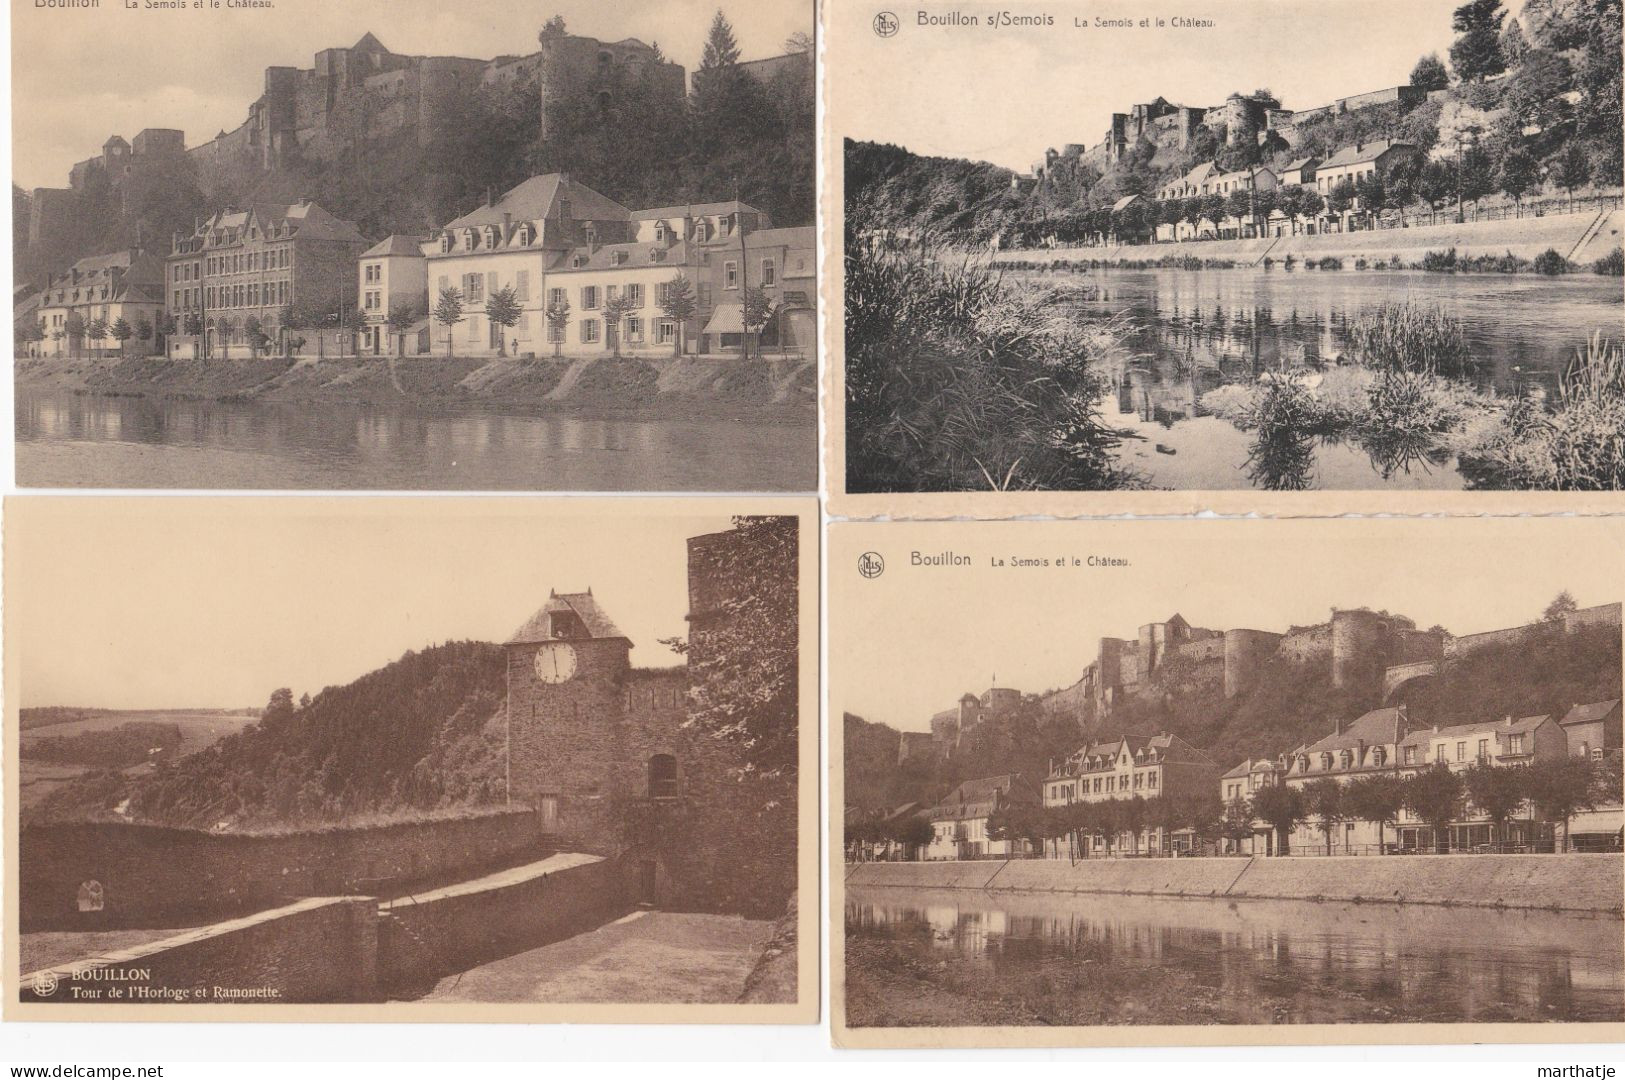 39 Cartes Postales De Bouillon - Province Luxemburg - Belgique - Collezioni E Lotti